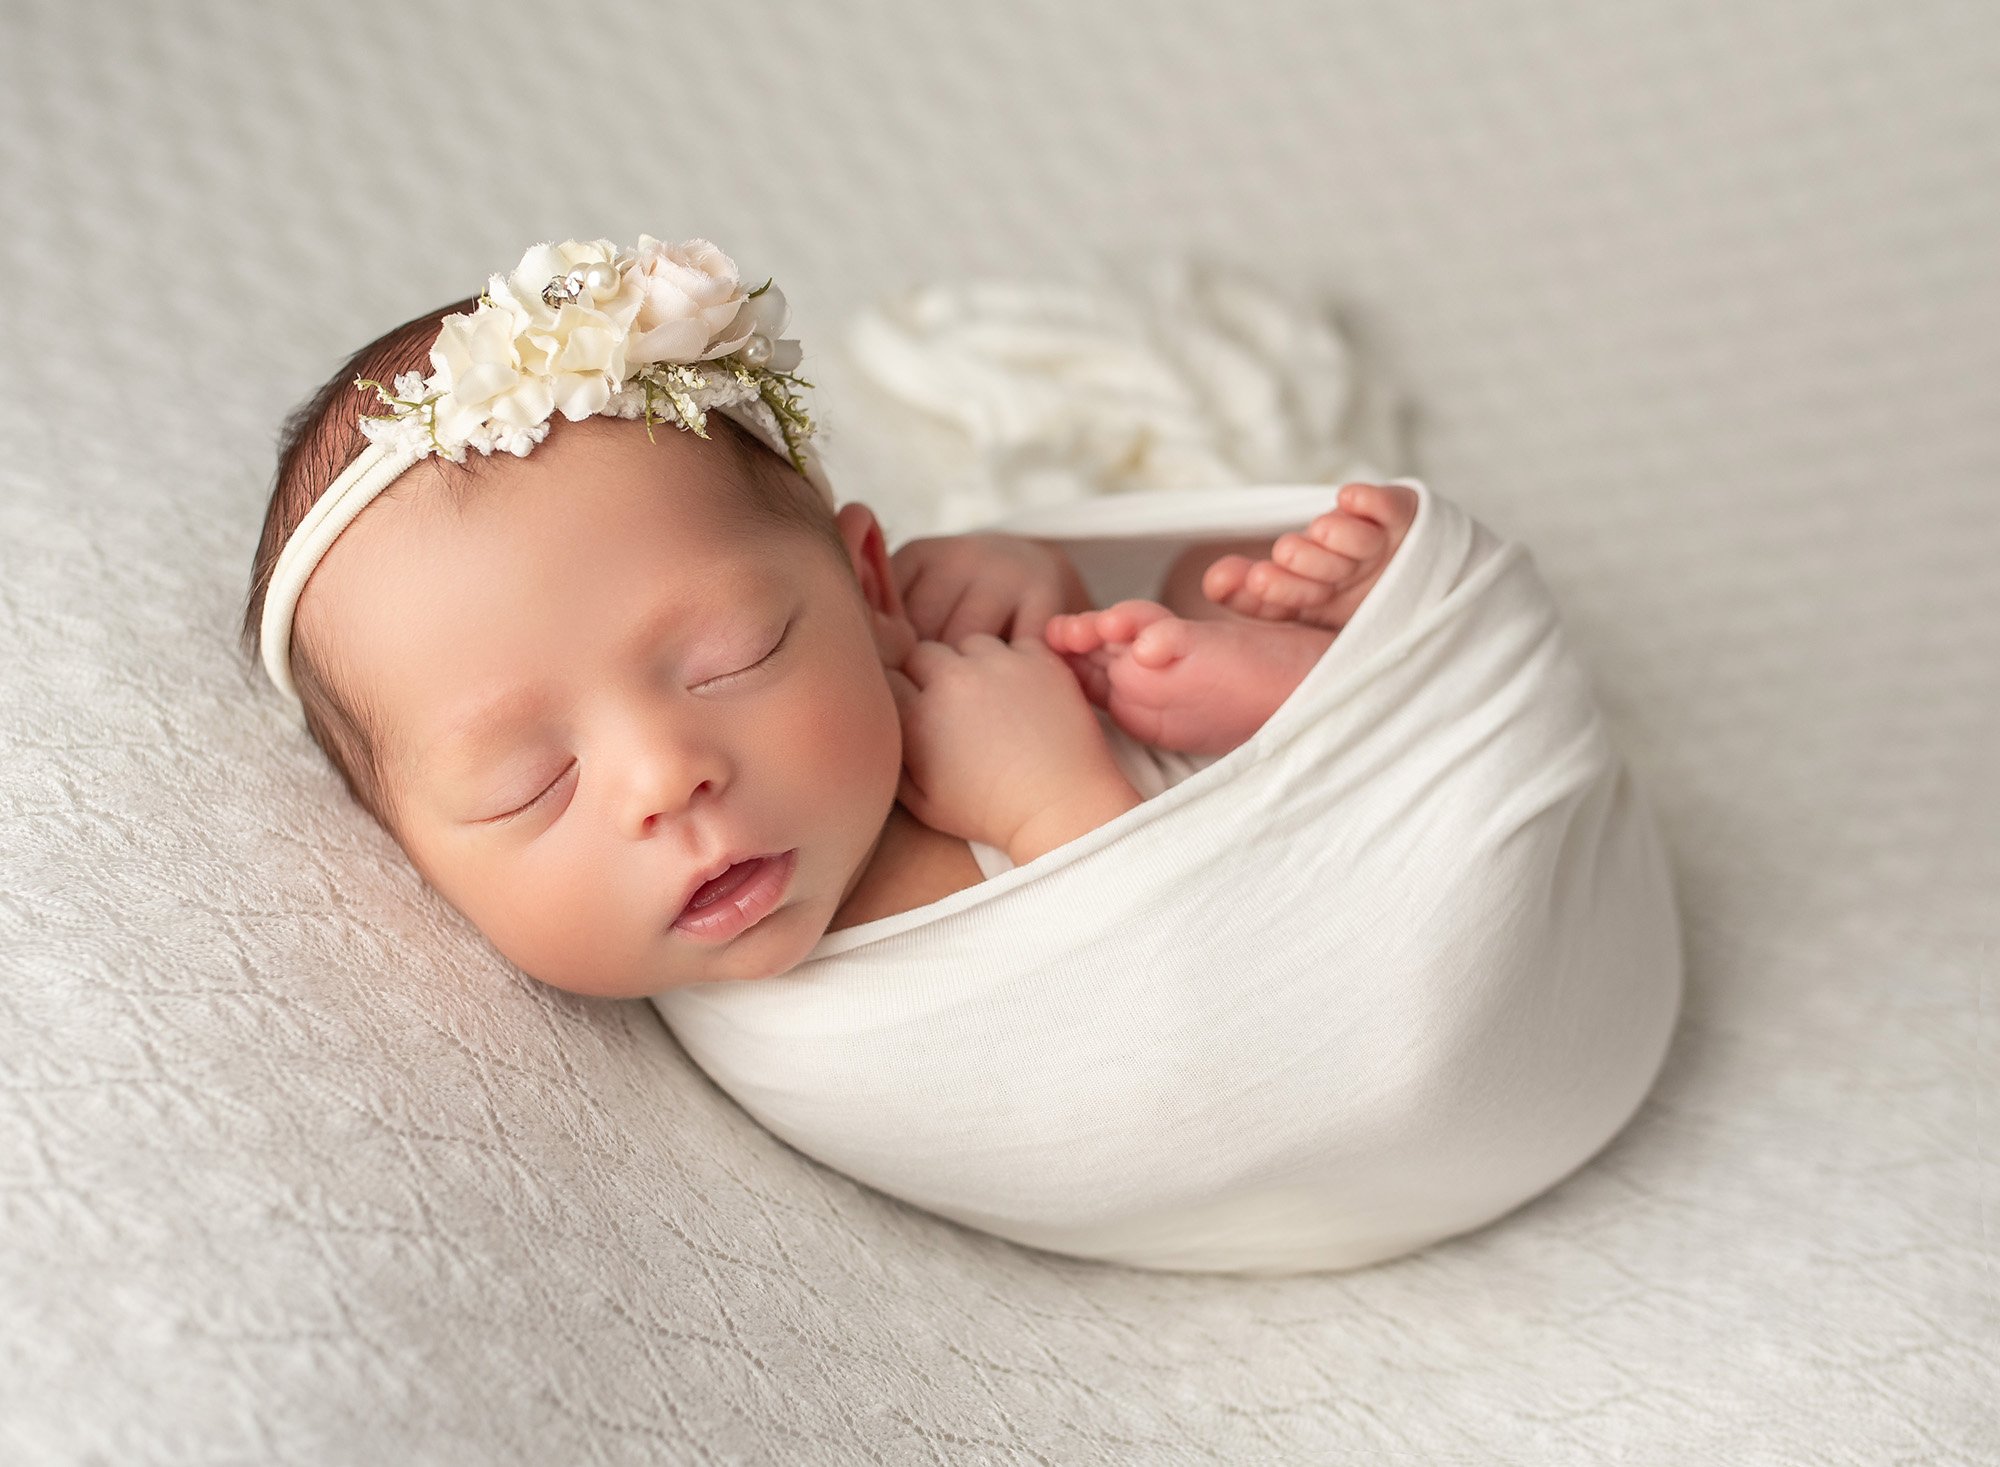 Light and Feminine Newborn Photos baby girl wrapped in cream swaddle wearing cream floral headband asleep